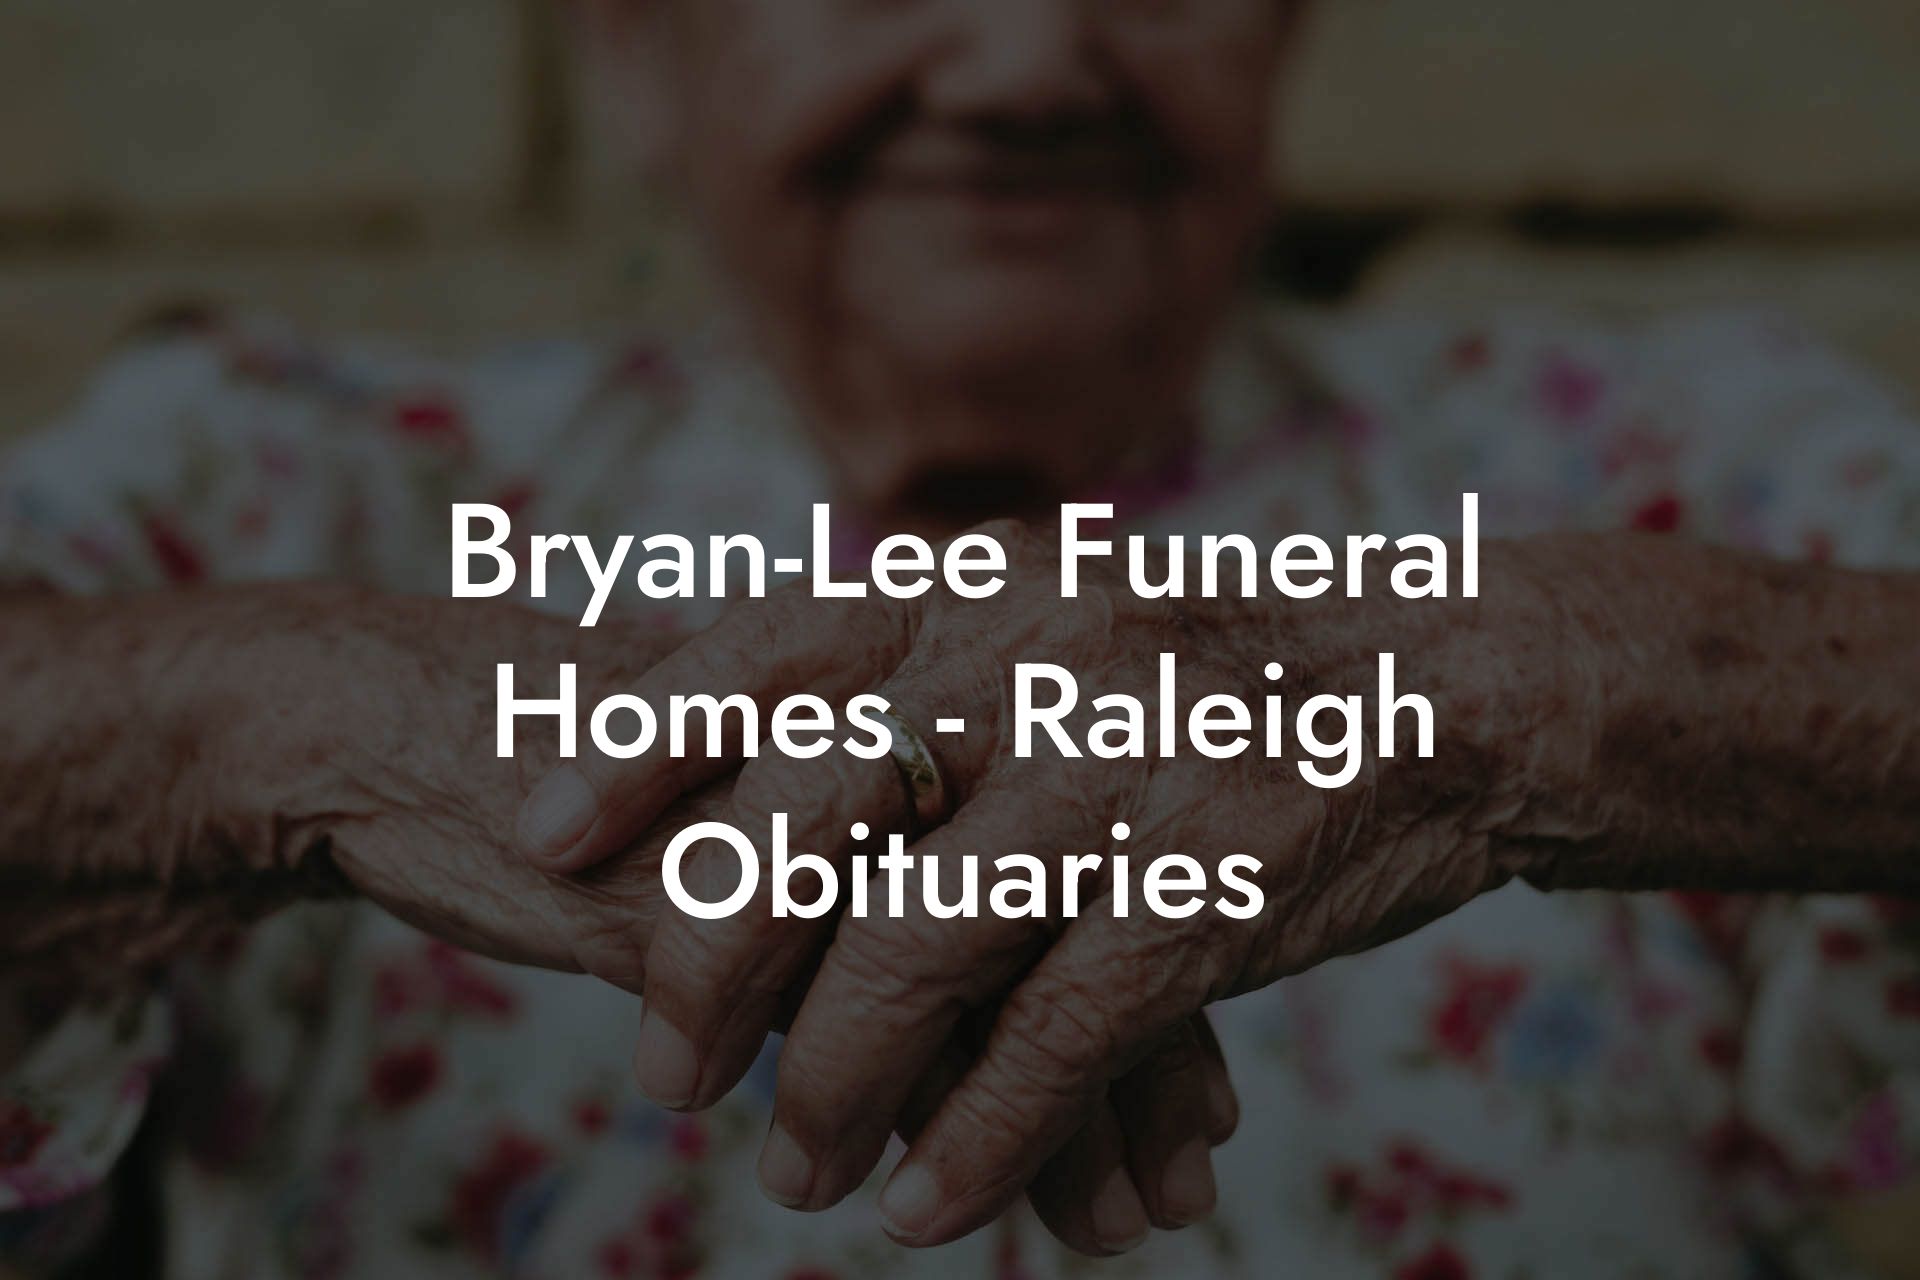 Bryan-Lee Funeral Homes - Raleigh Obituaries